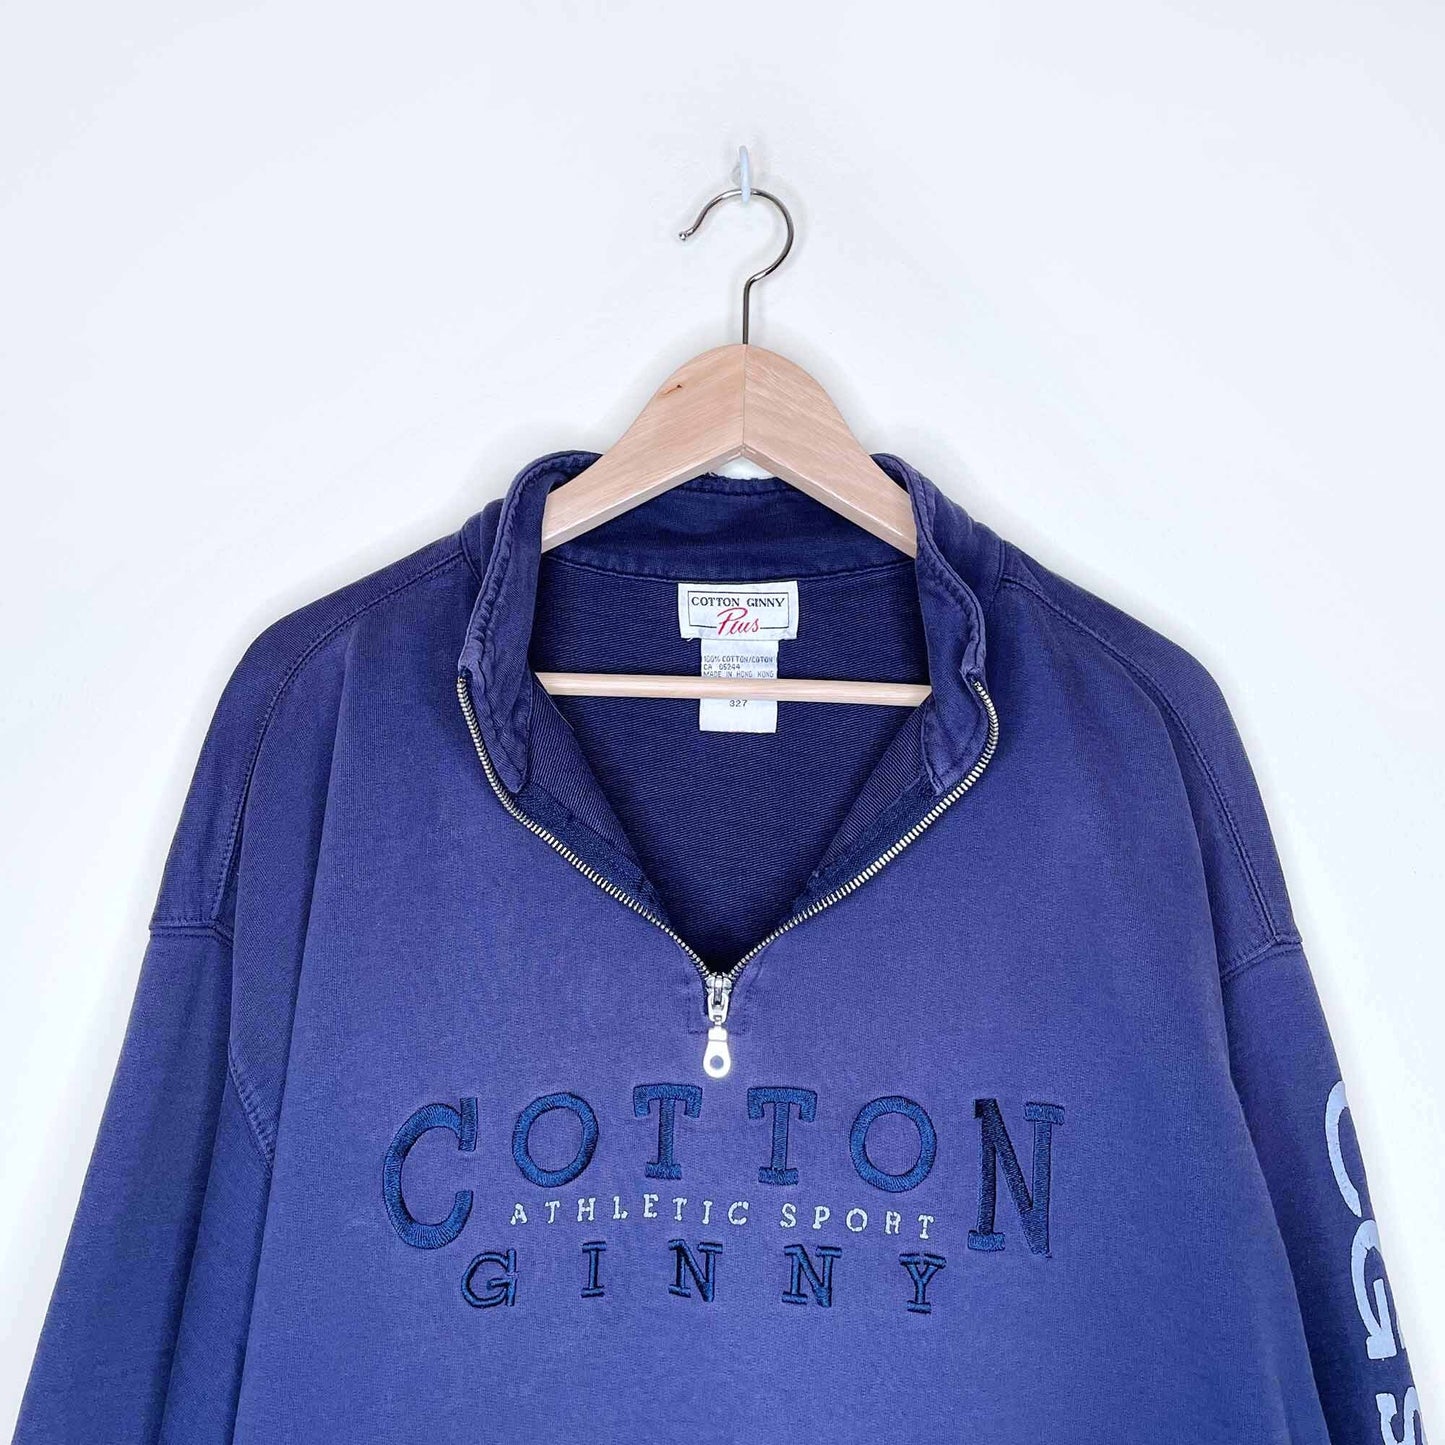 vintage cotton ginny plus 1/4 zip pullover sweatshirt - size medium